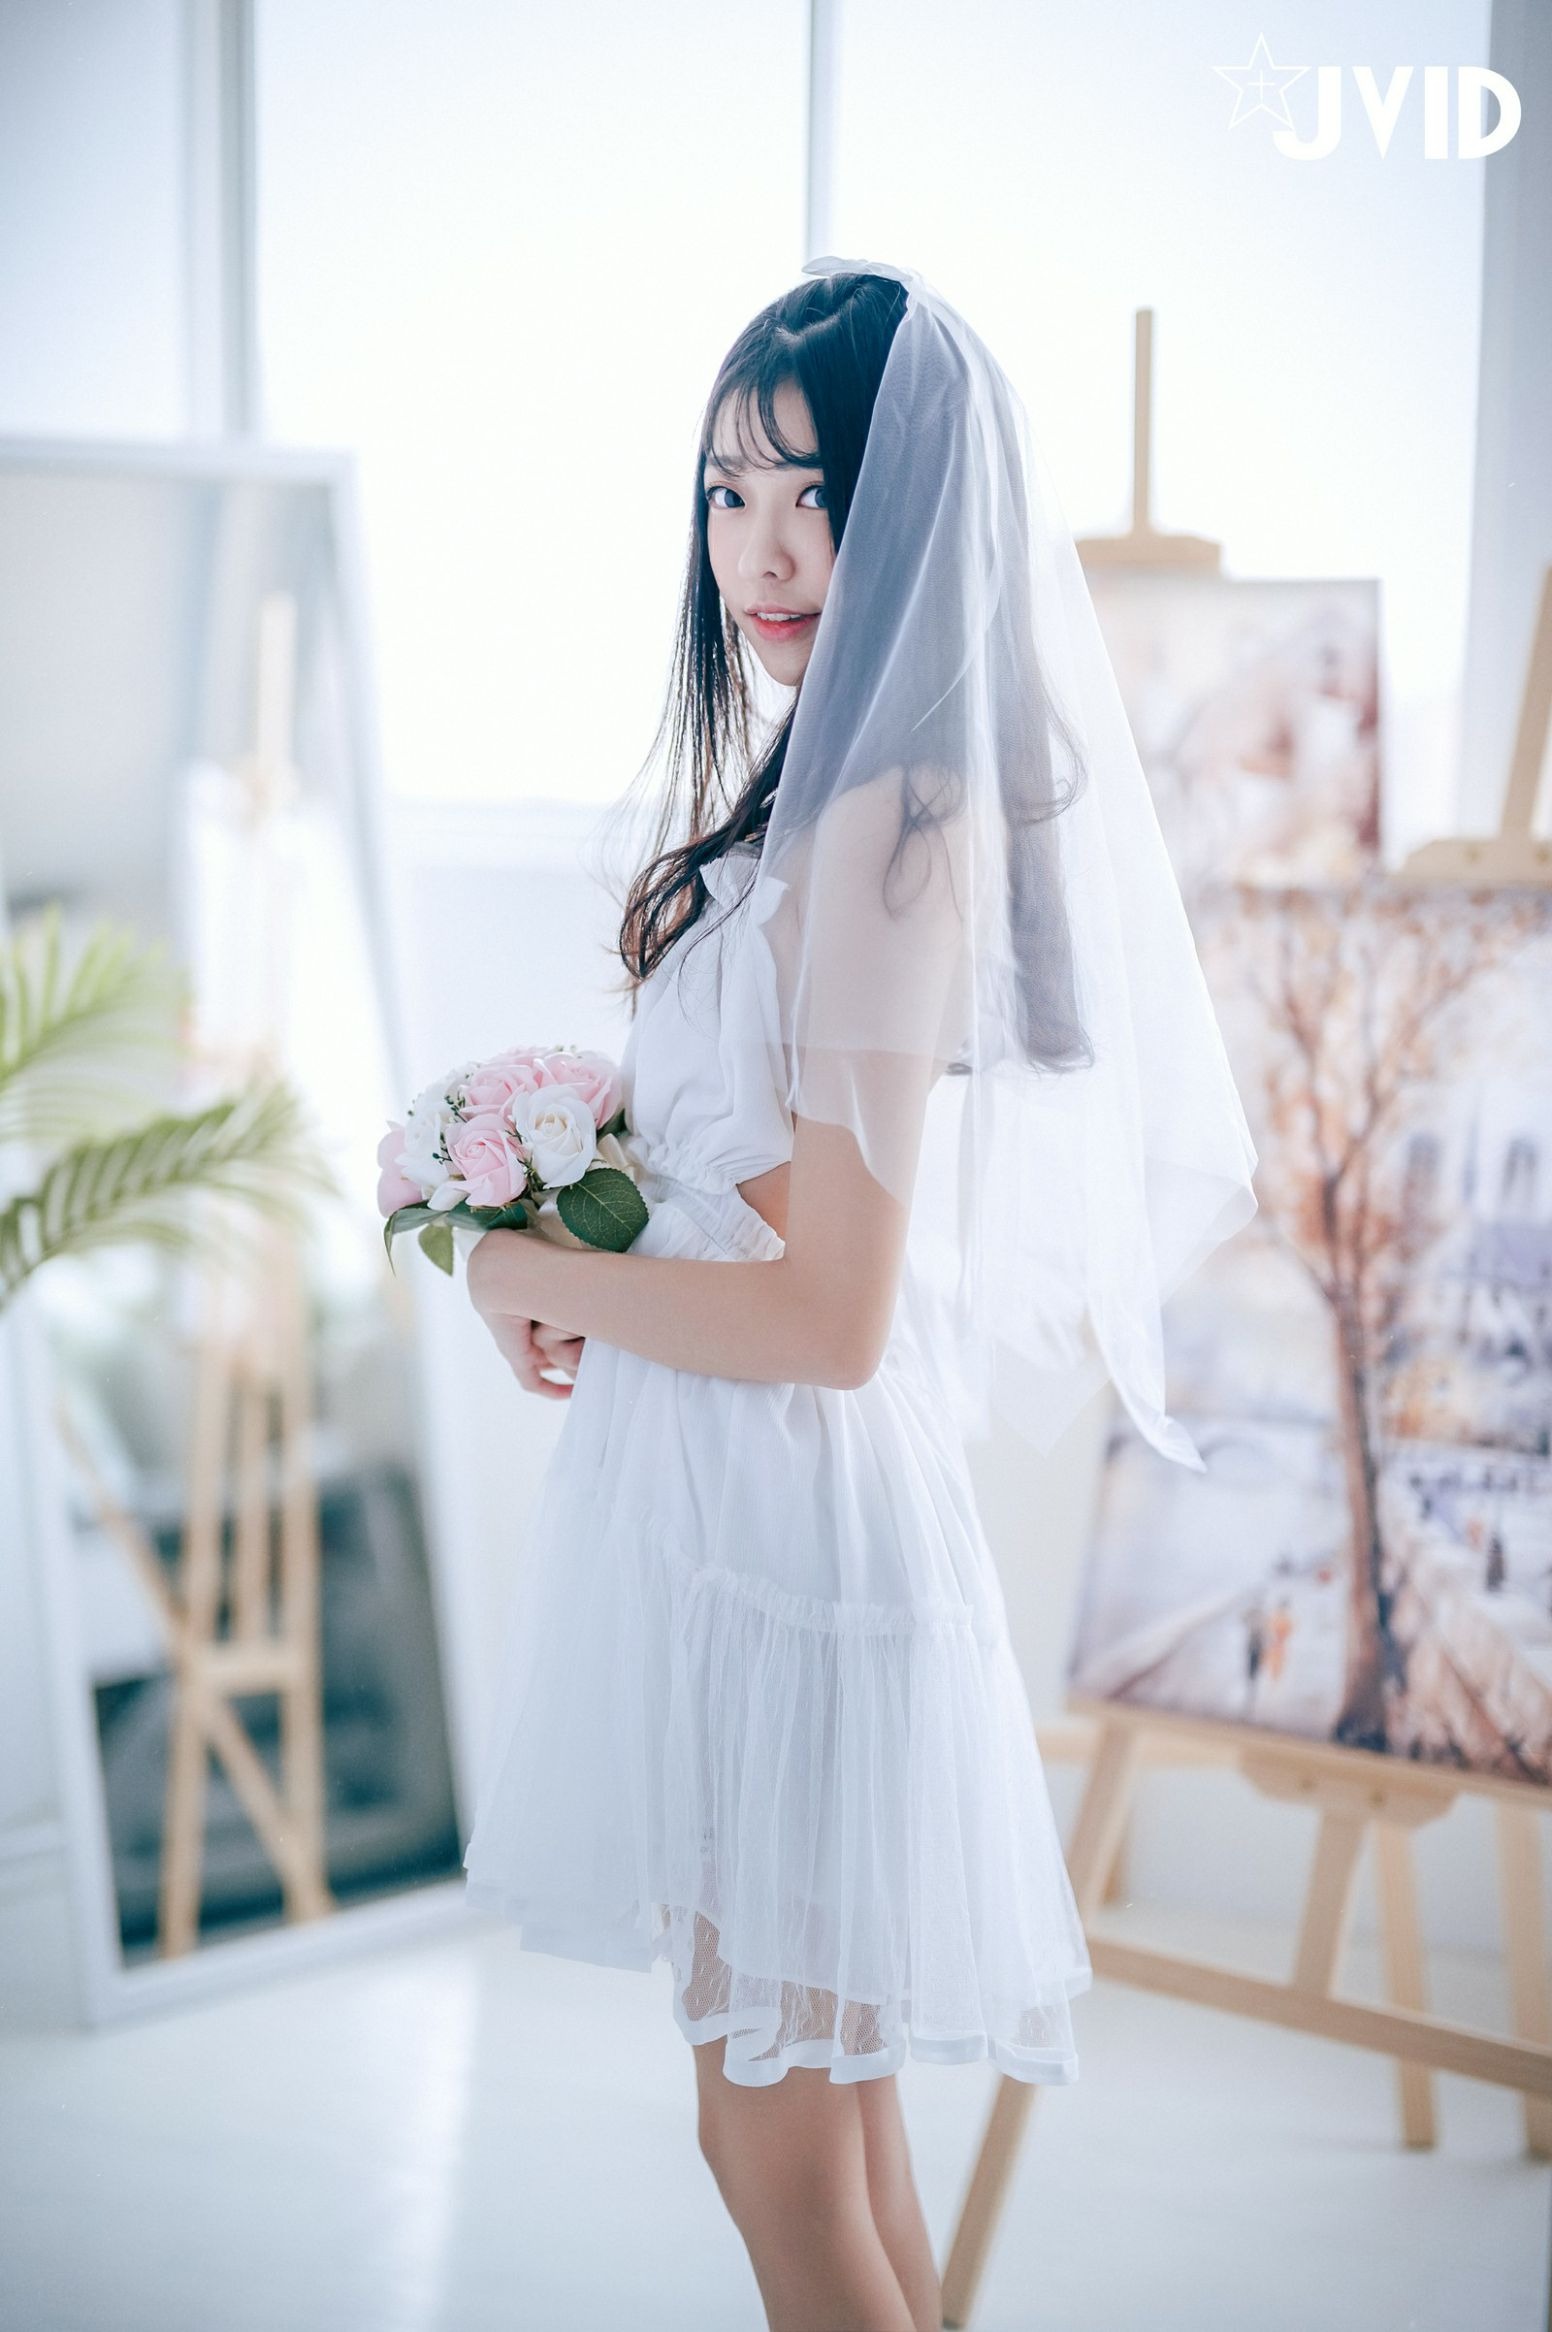 JVID - 妍妍 純白の花嫁(34)